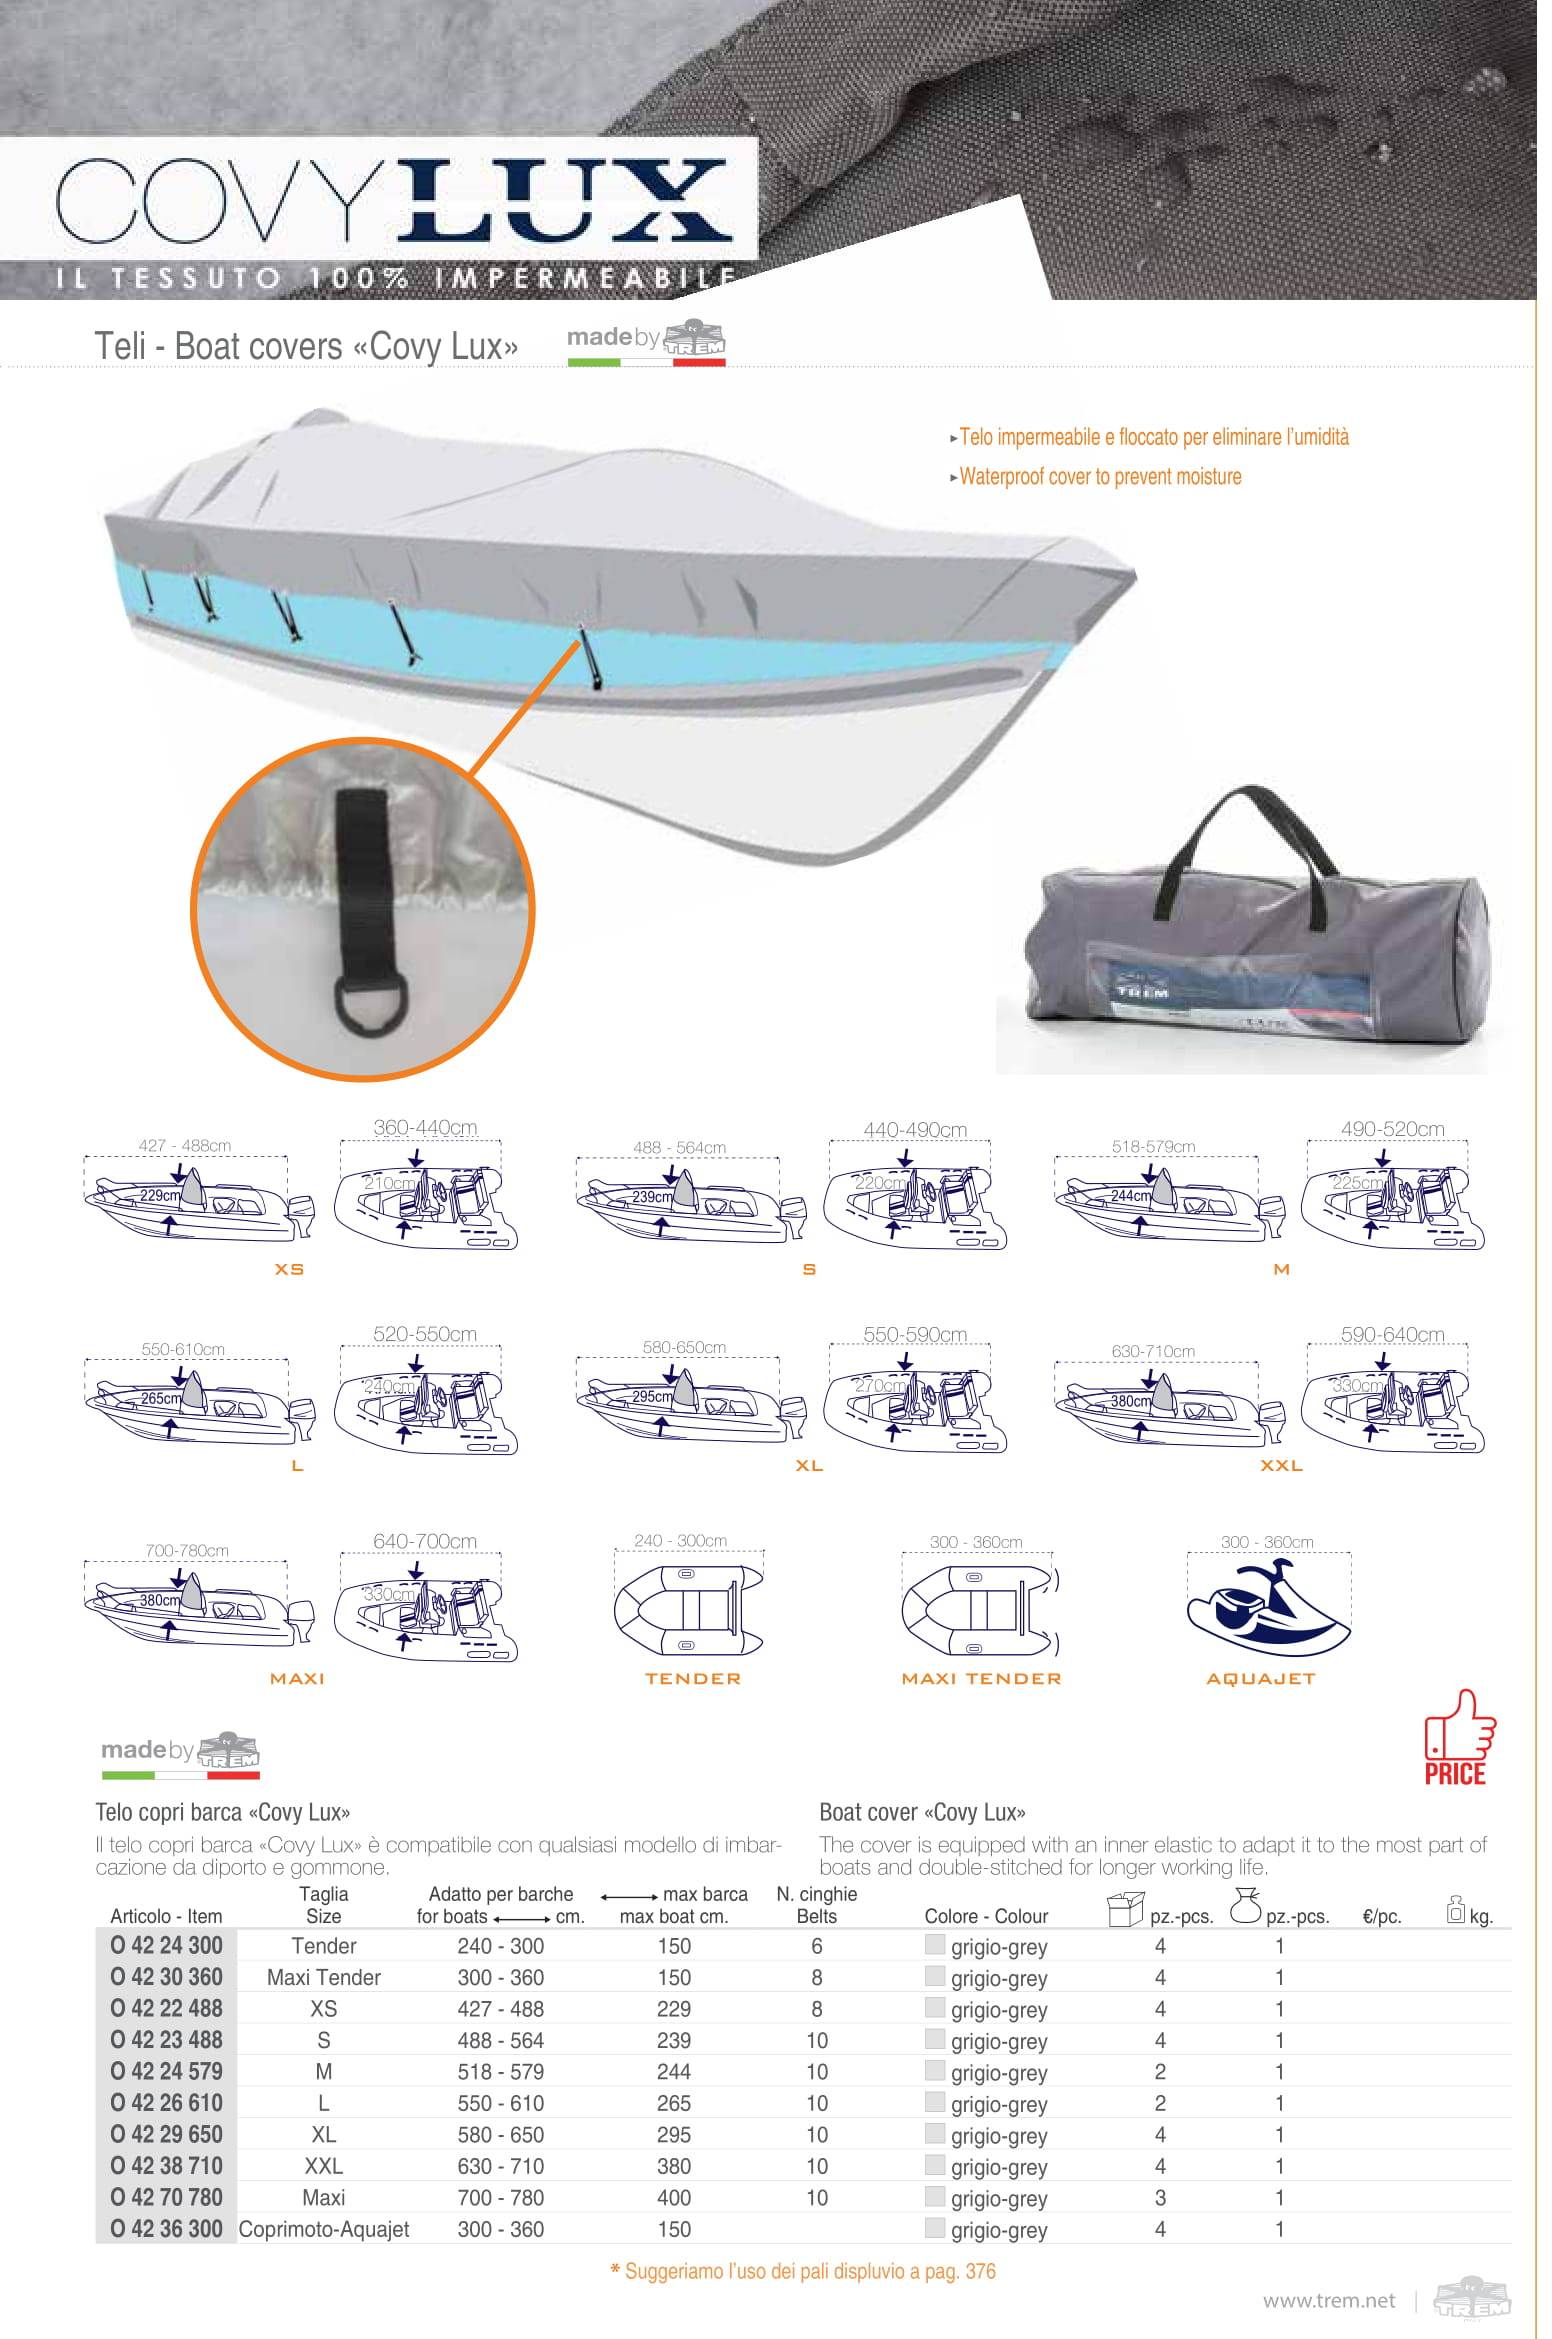 Prelata stationare barca XL Covy Lux 580-650x295cm